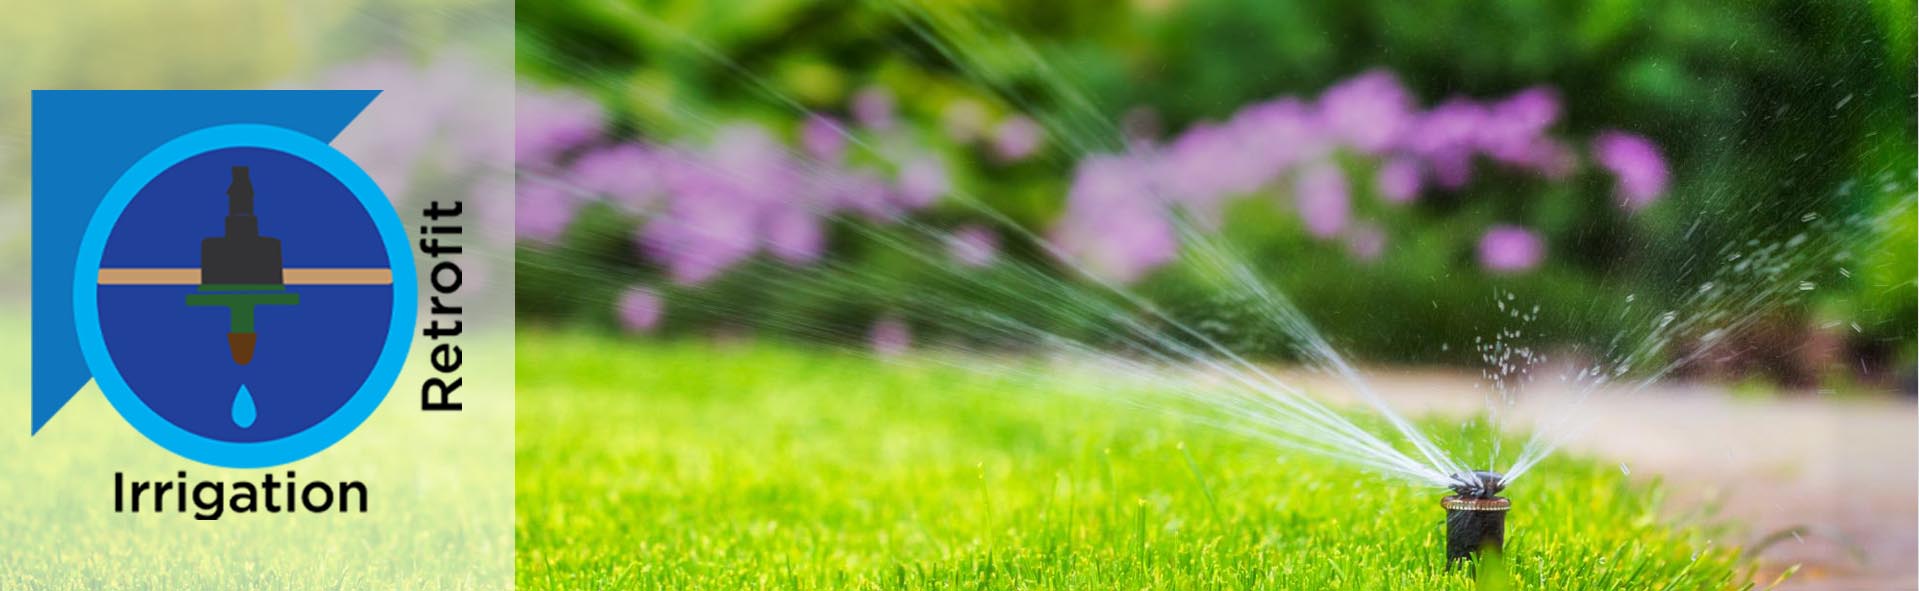 high efficiency sprinkler head watering lawn with planter in background